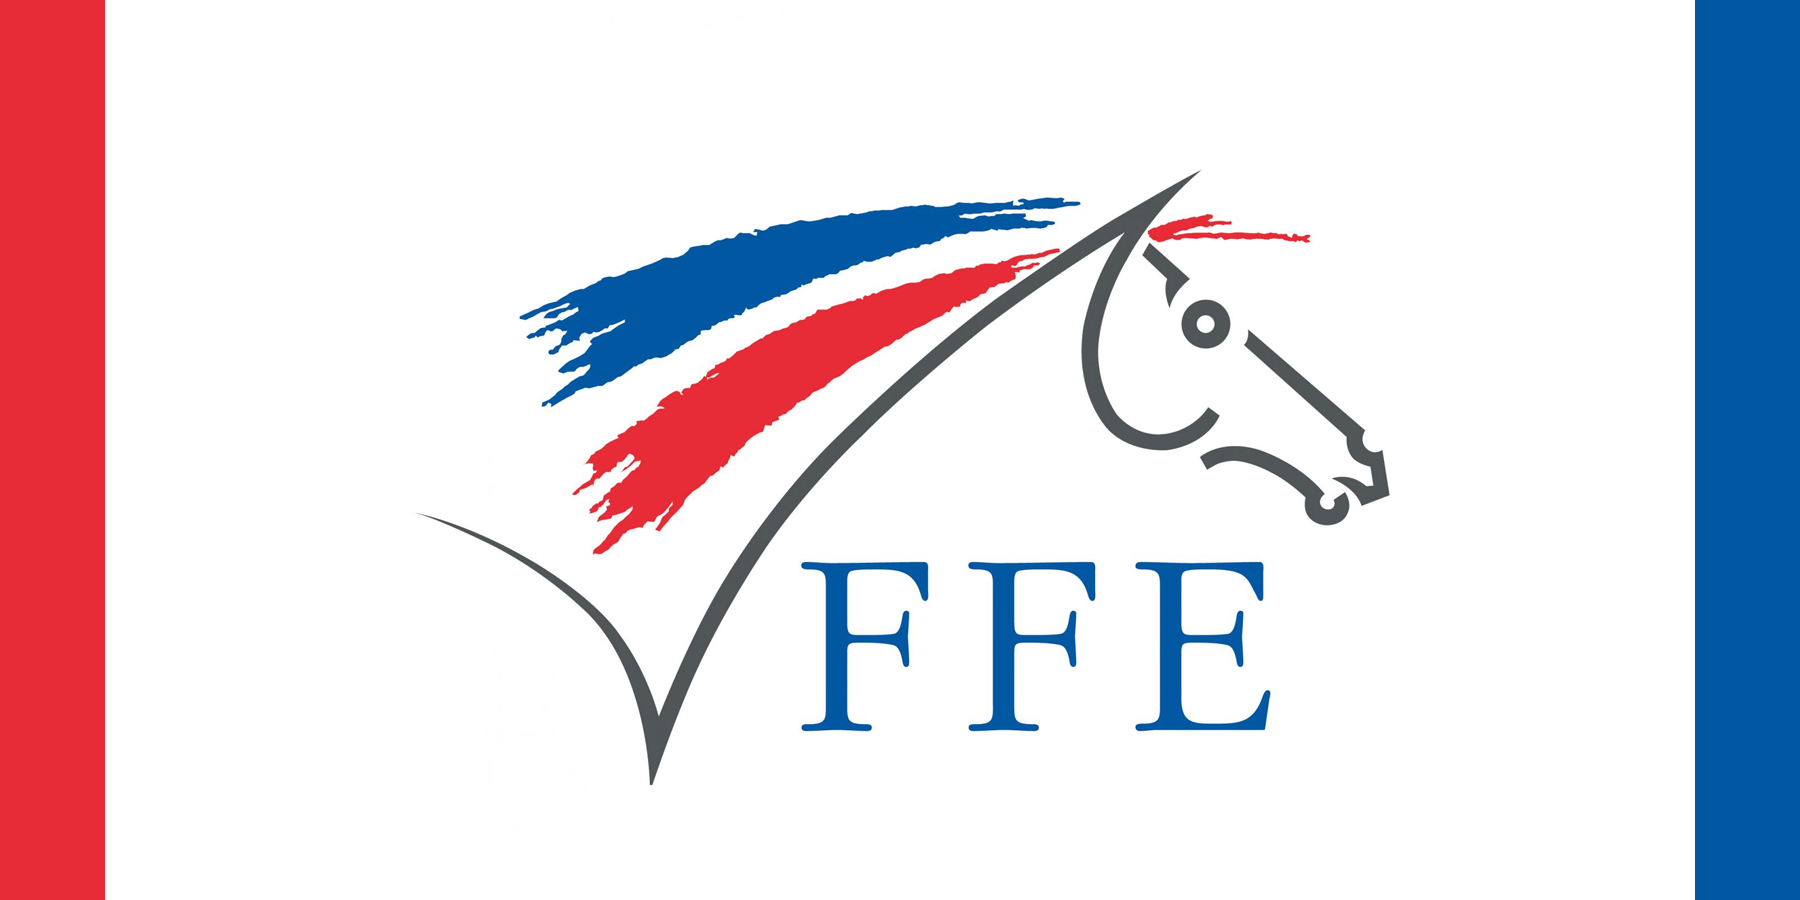 FFEcompet login, registration, search and customer service - ffecompet.ffe.com